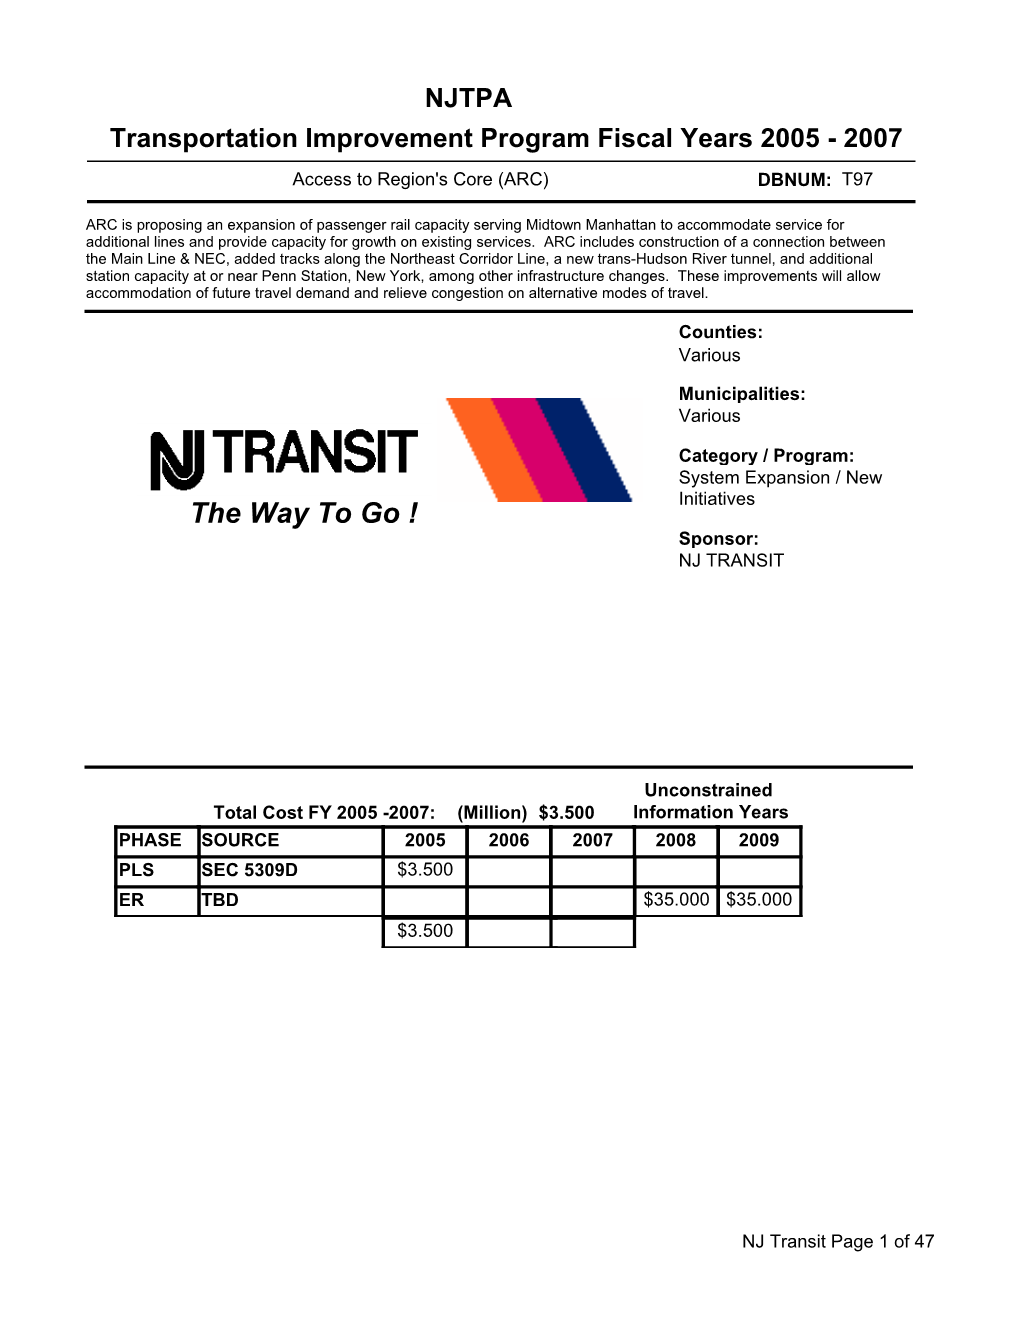 NJTPA Transportation Improvement Program Fiscal Years 2005 - 2007